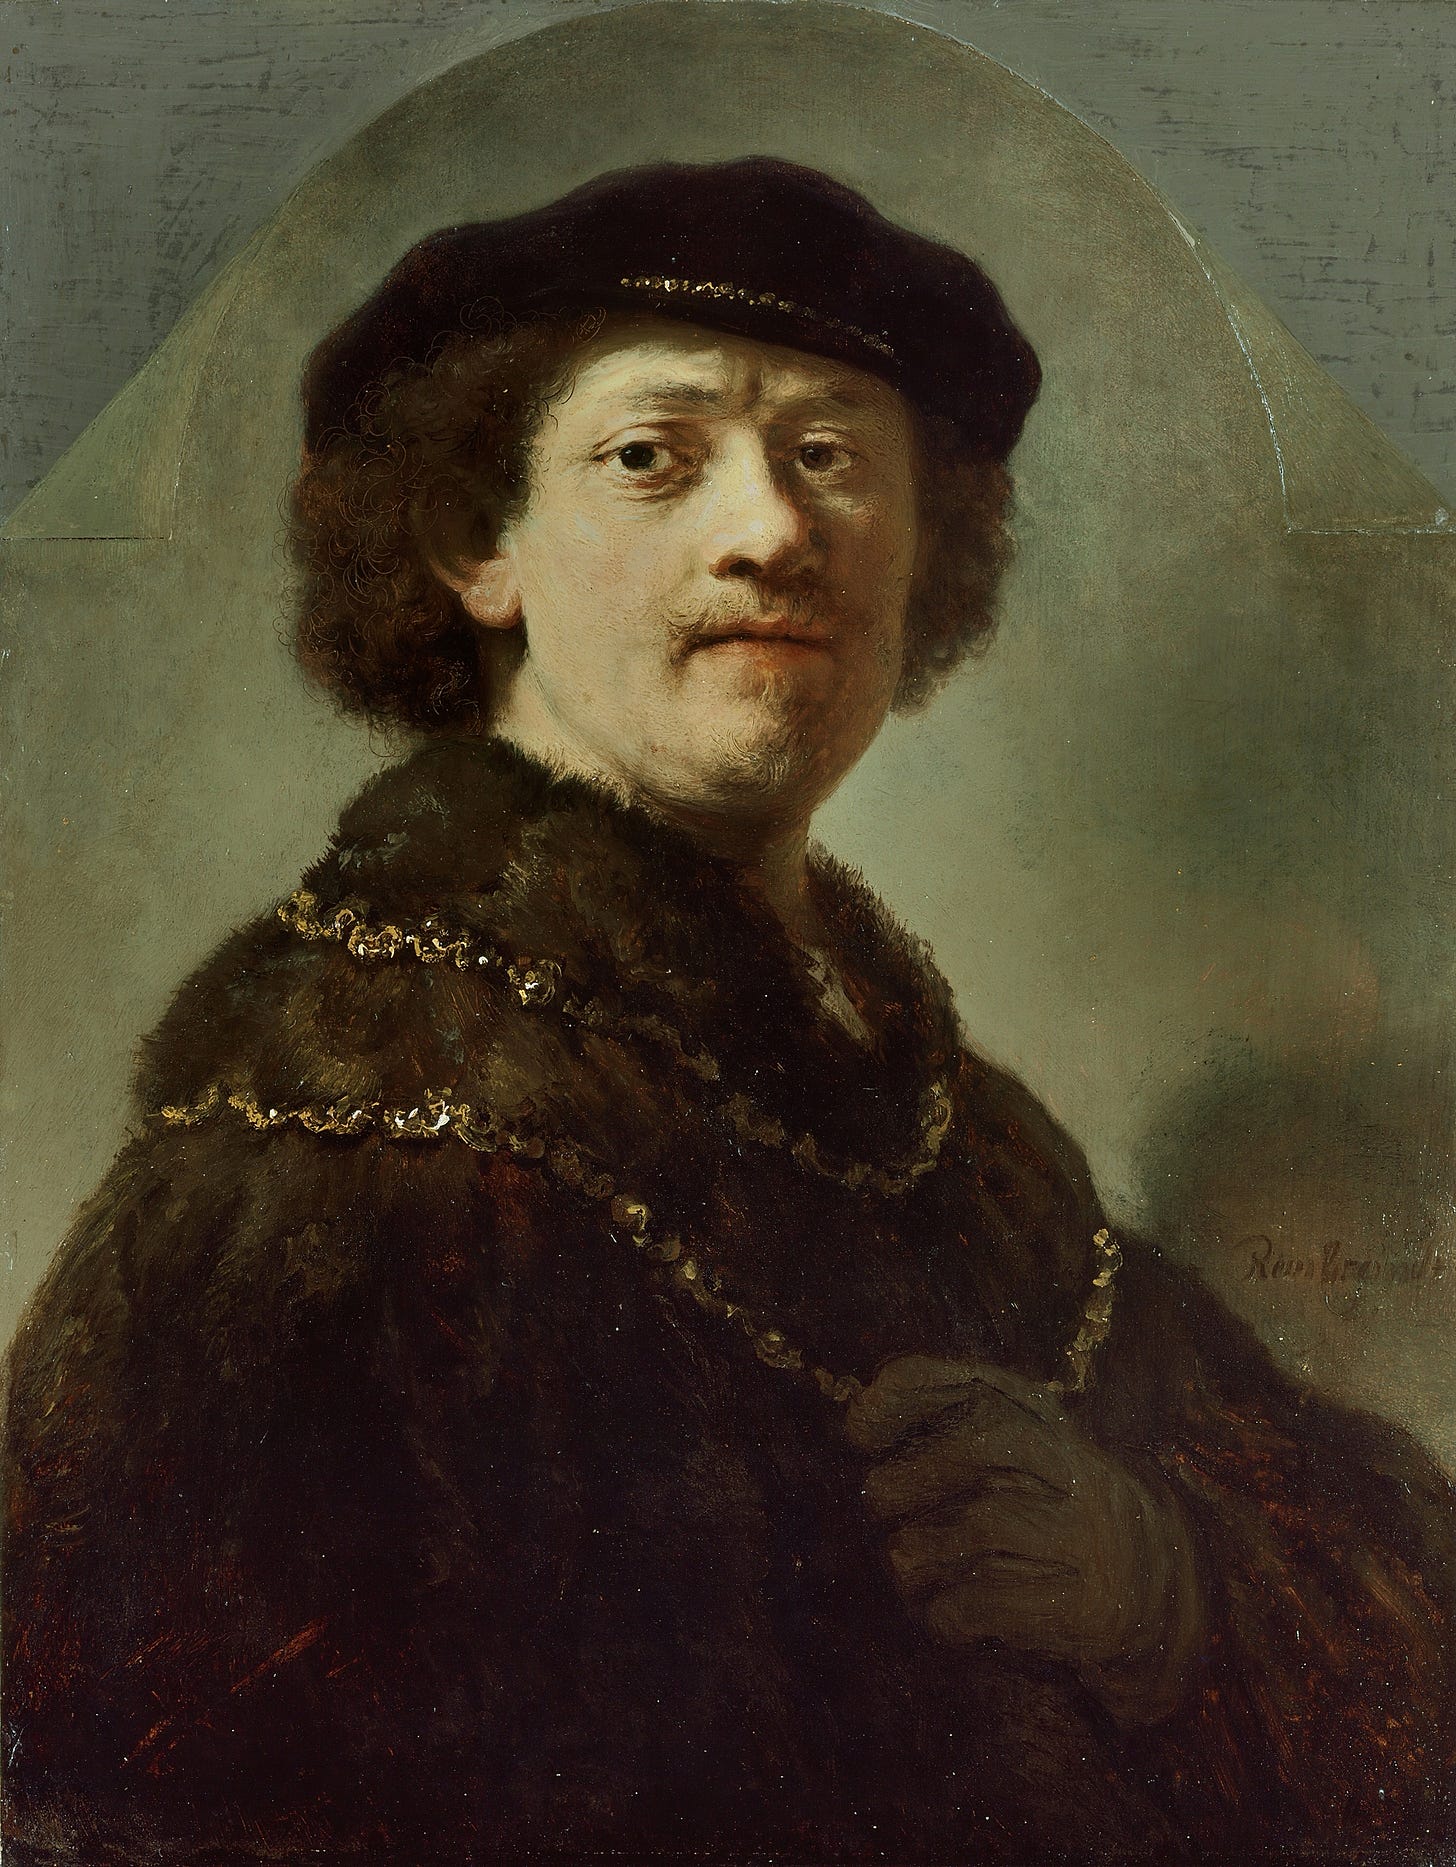 Self-Portrait in a Black Cap (1637) by Rembrandt van Rijn